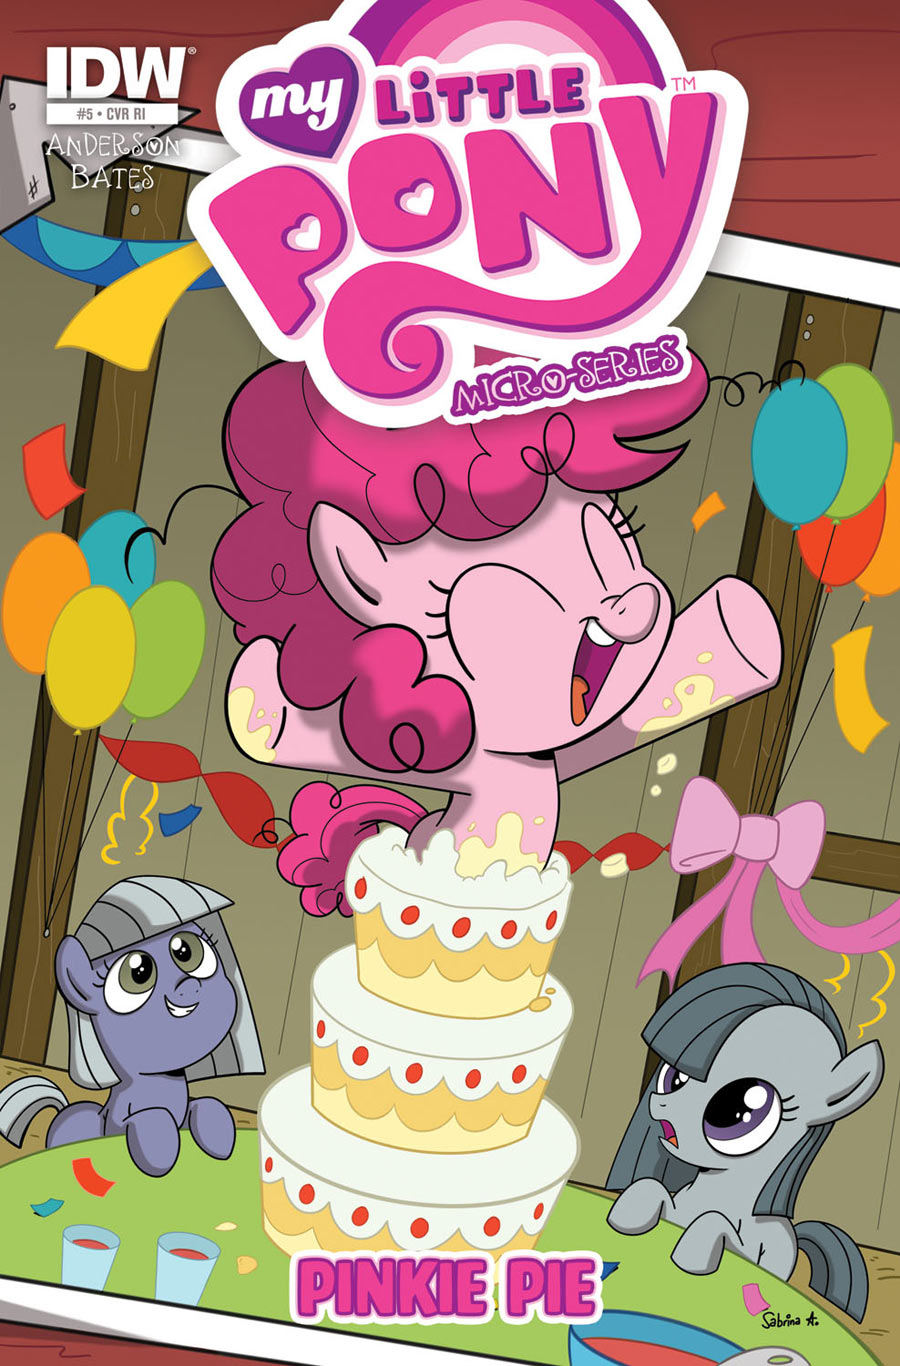 My Little Pony: Mane 6 Micro-Series #5 (of 6): Pinkie Pie